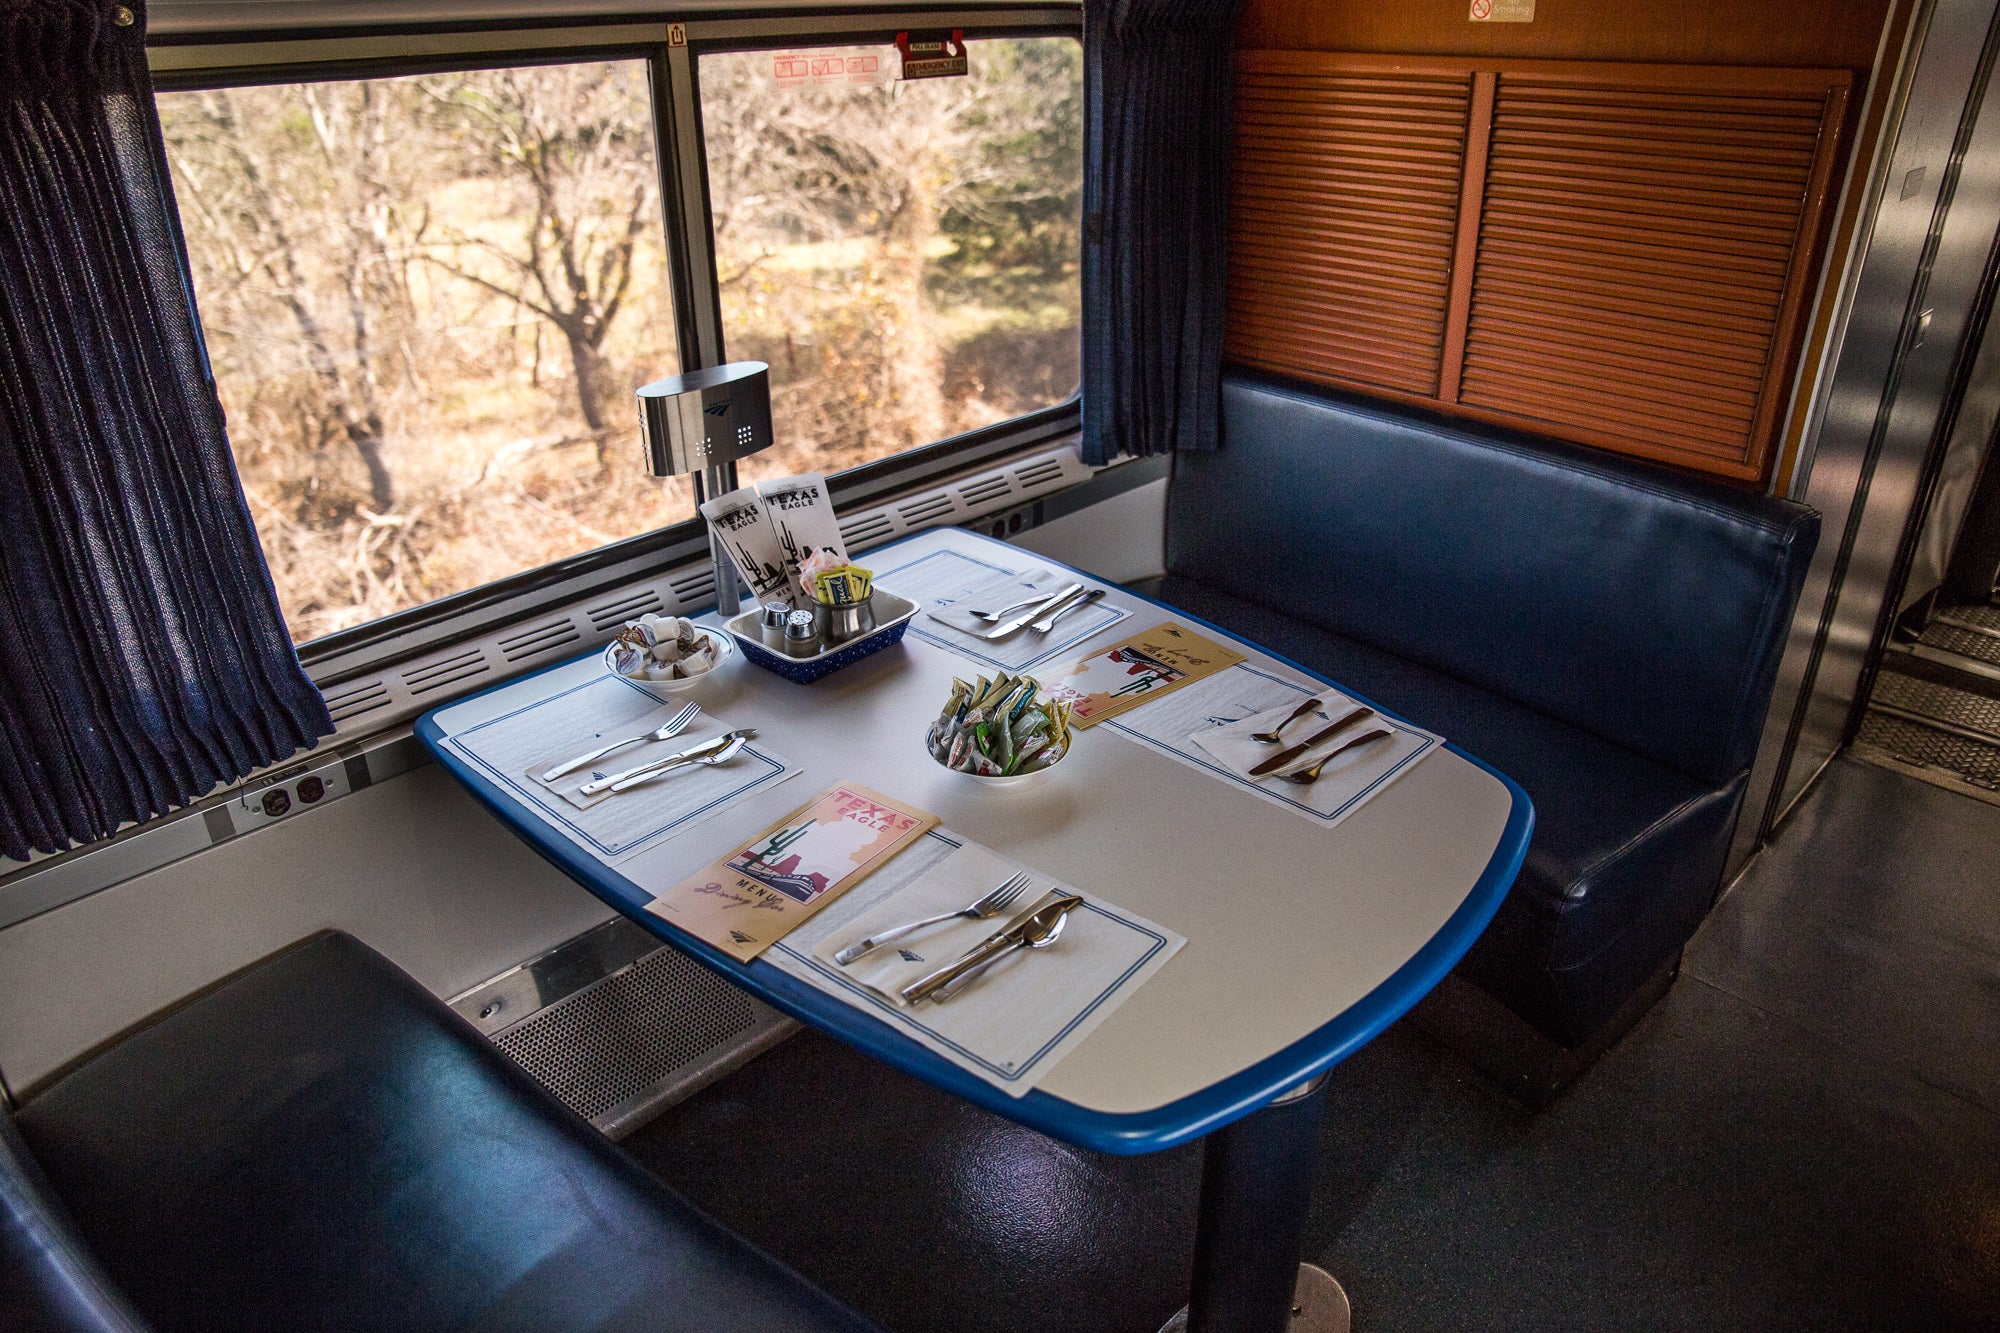 Amtrak Dining Car